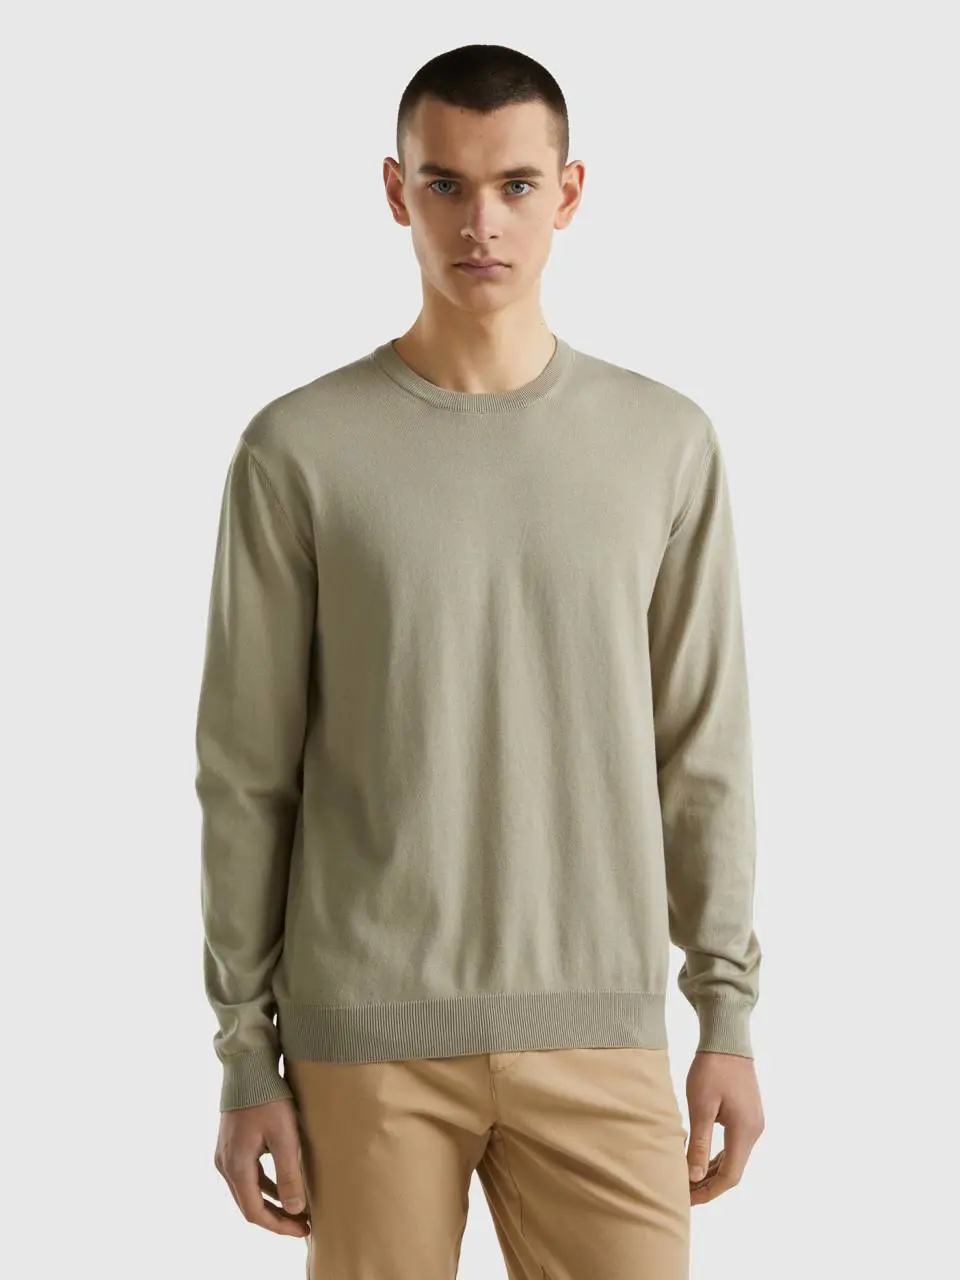 Benetton crew neck sweater in 100% cotton. 1